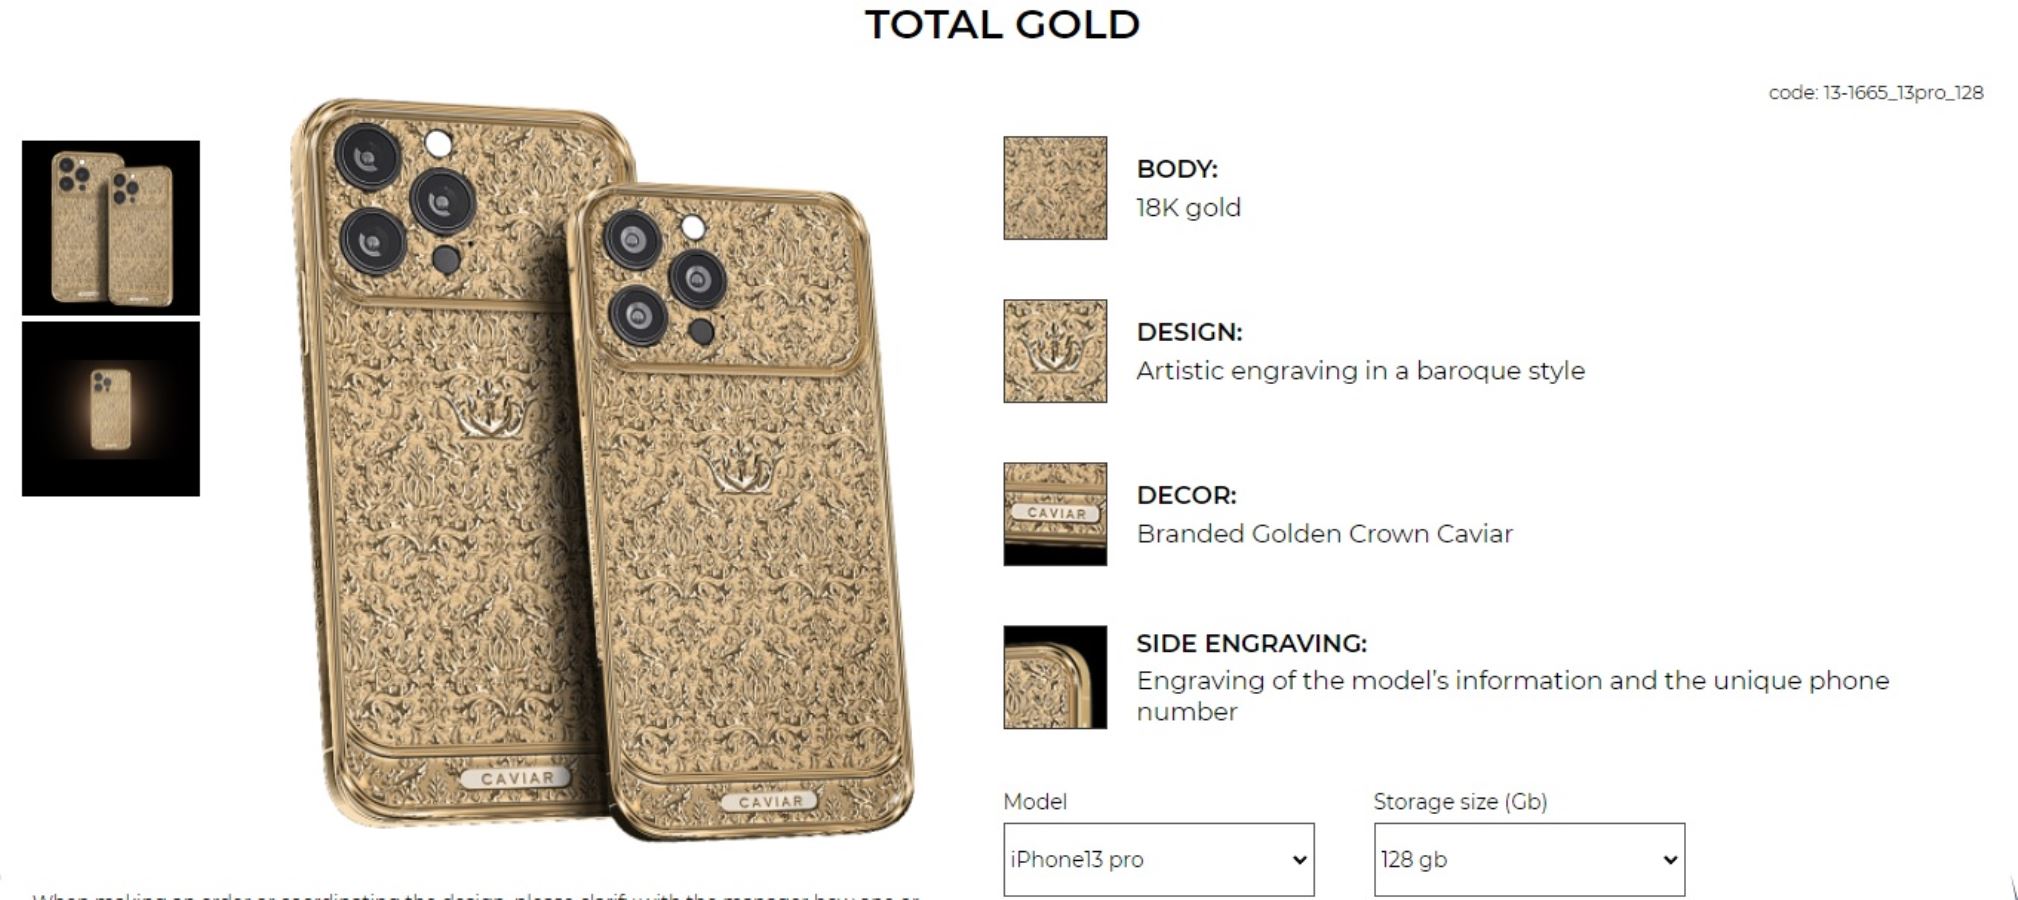 18 ayar altınla kaplanmış iPhone 13 Pro Max satışa çıktı: Vergisiz fiyatı 430 bin TL